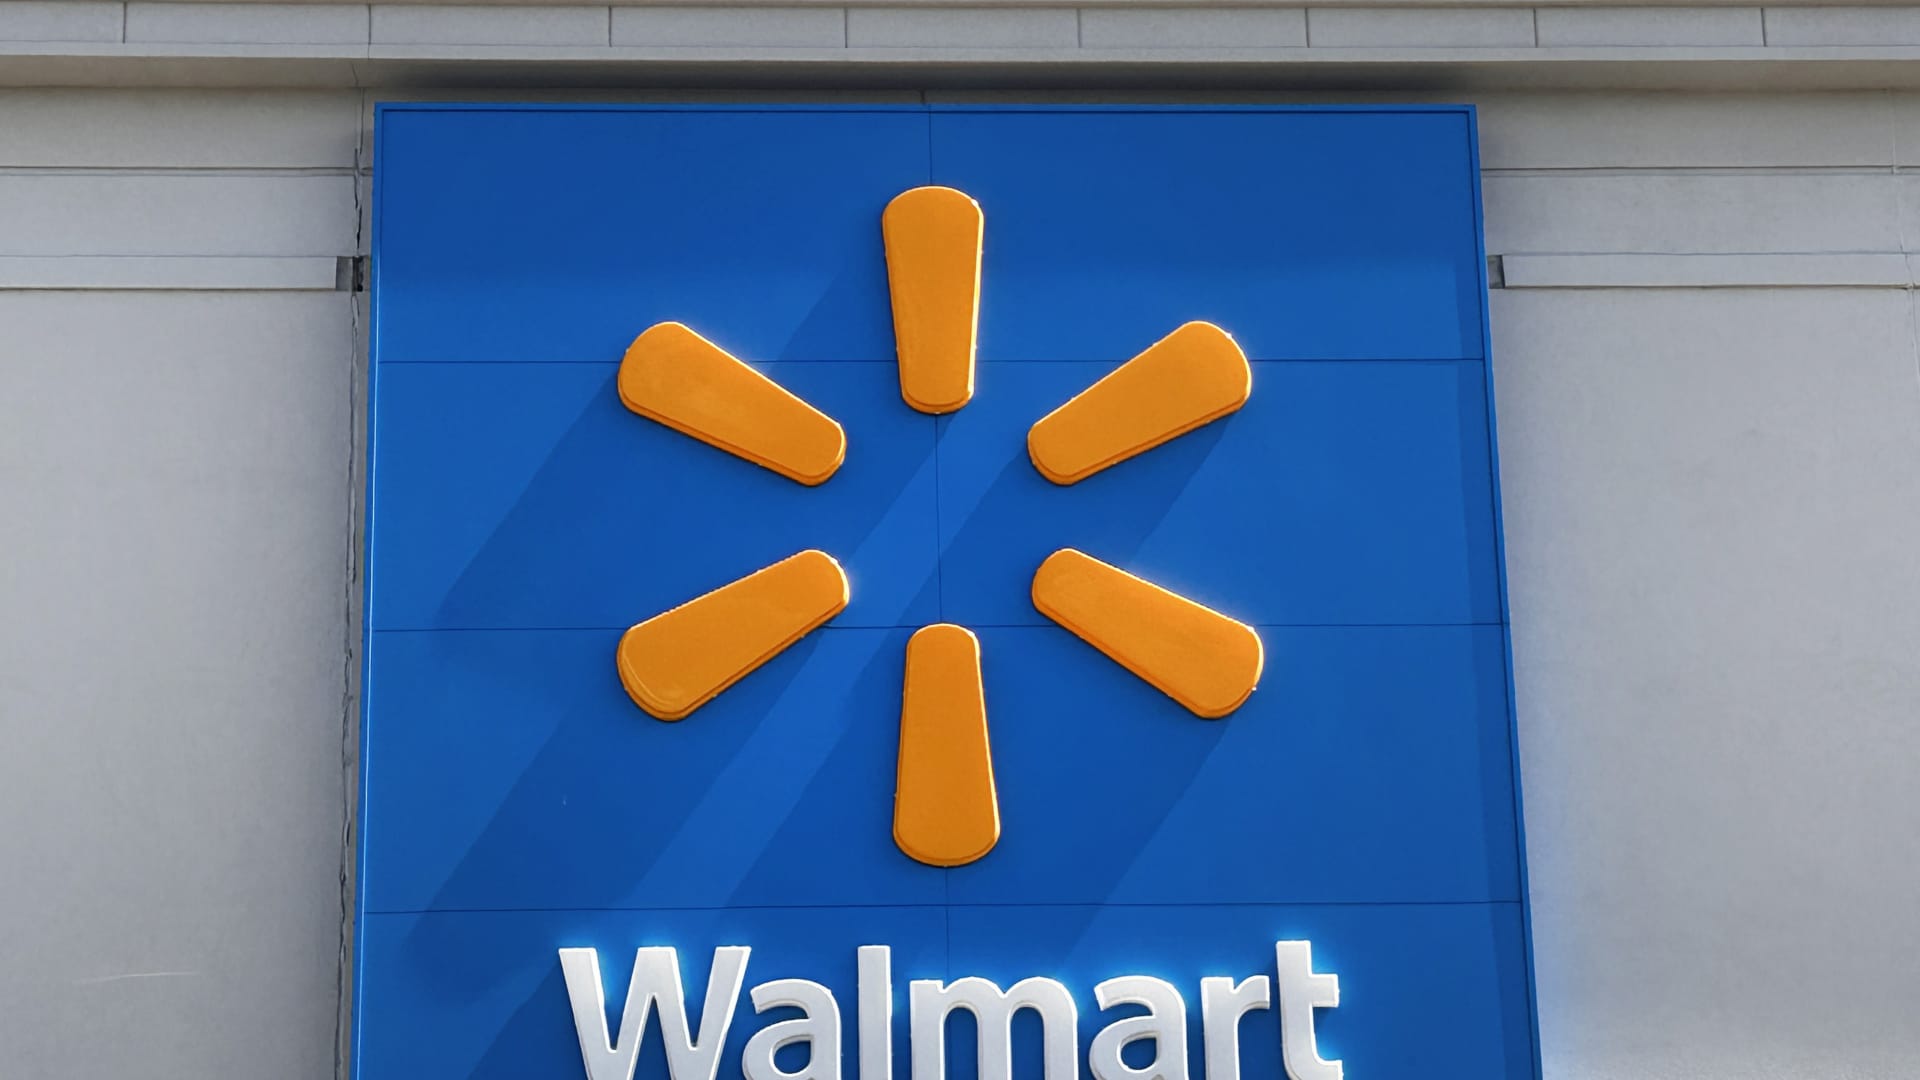 Walmart megastore exterior and logo sign, Denver, North Carolina.